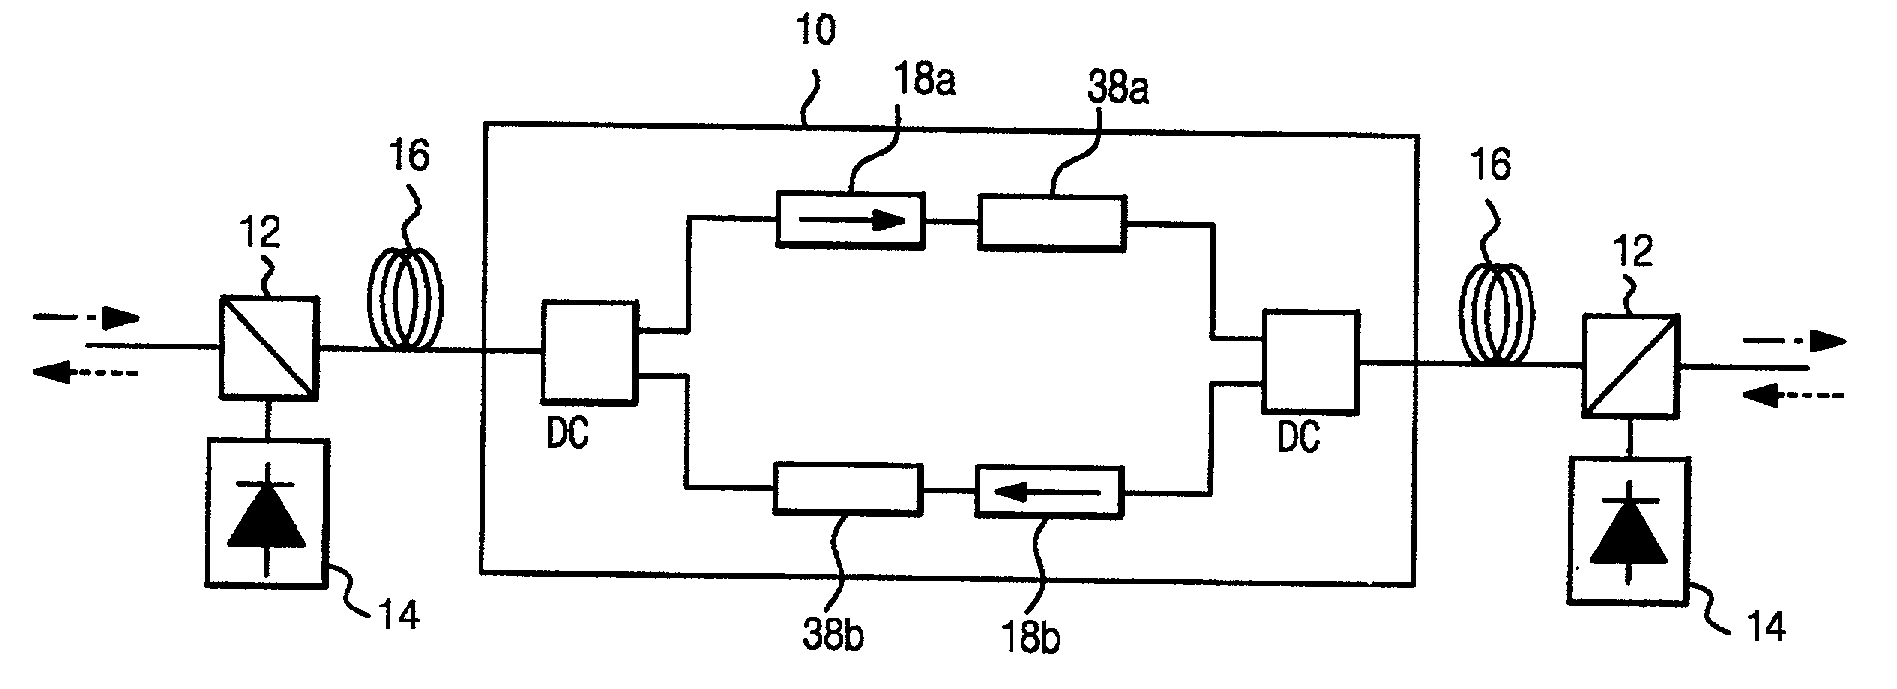 Multi-stage bidirectional optical amplifier